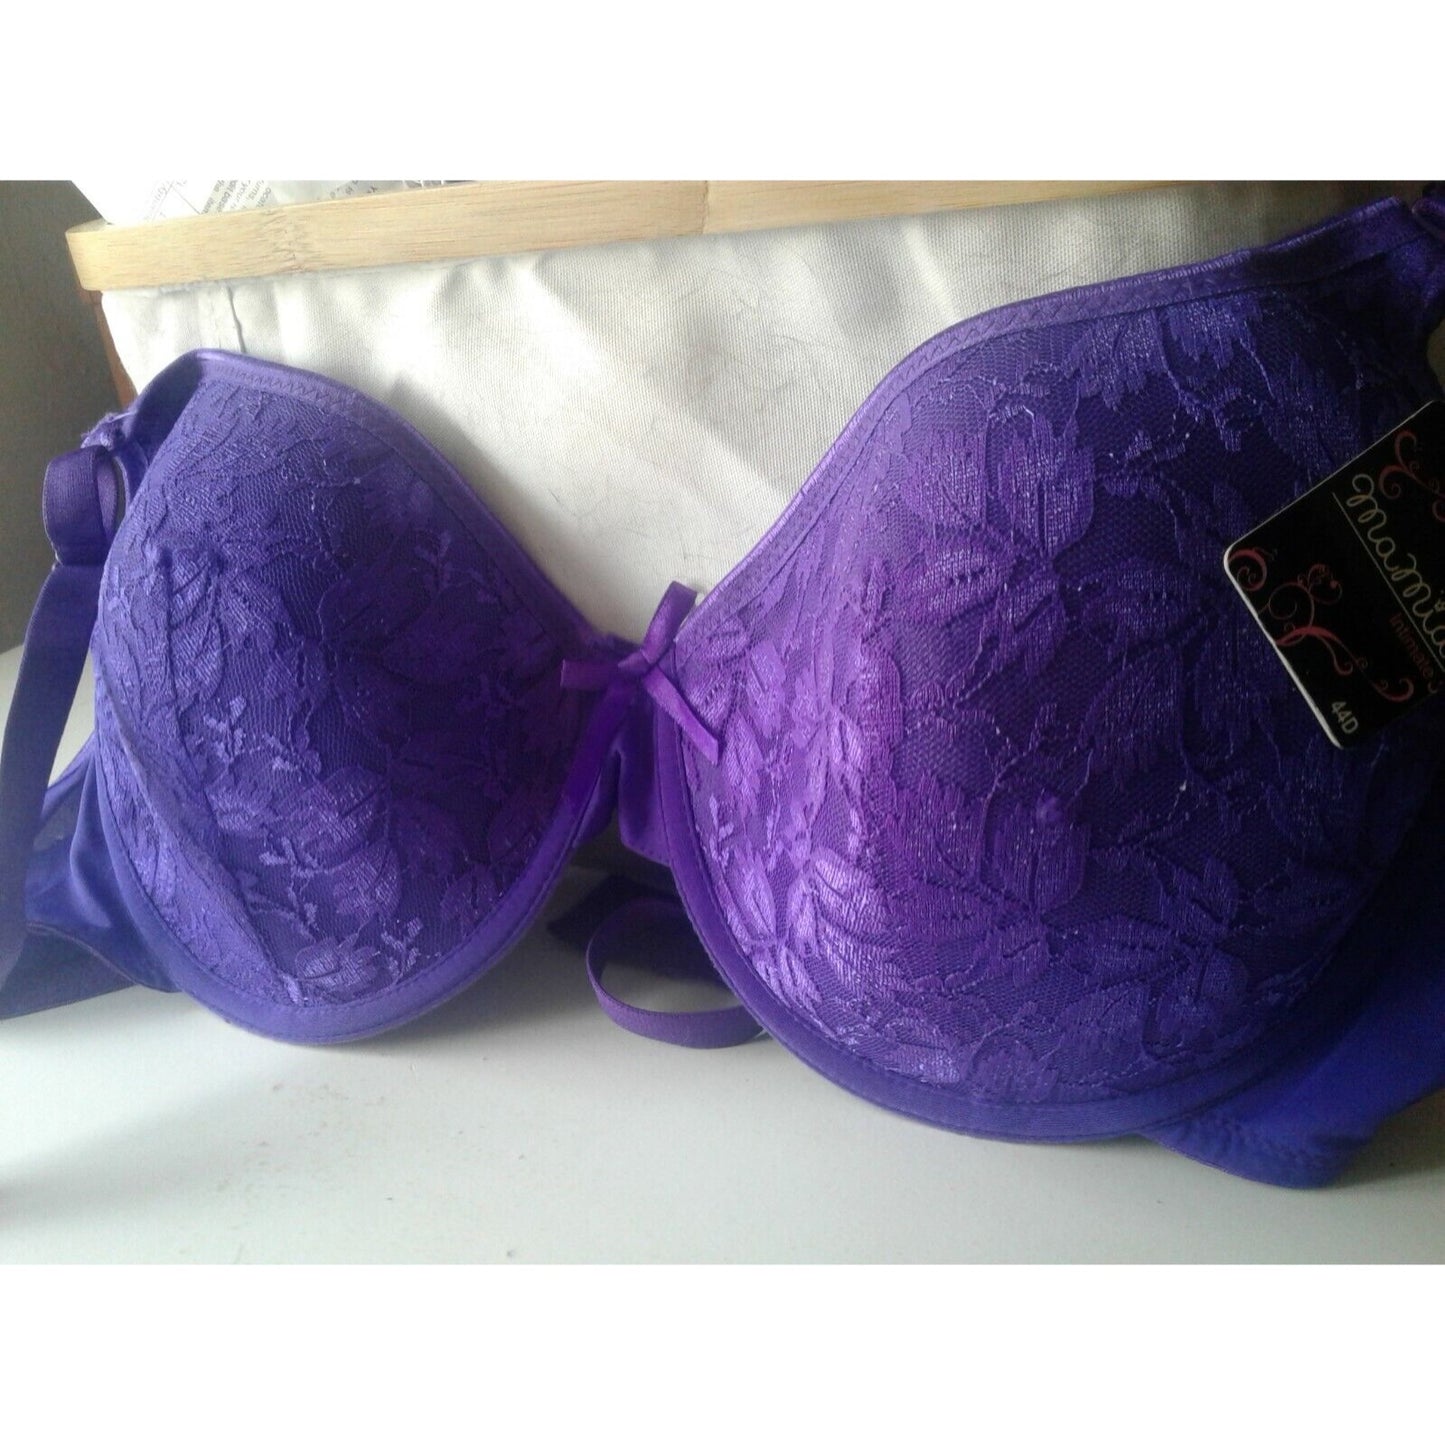 Bra MaMia Size 44 D Purple Lace over light padding underwire